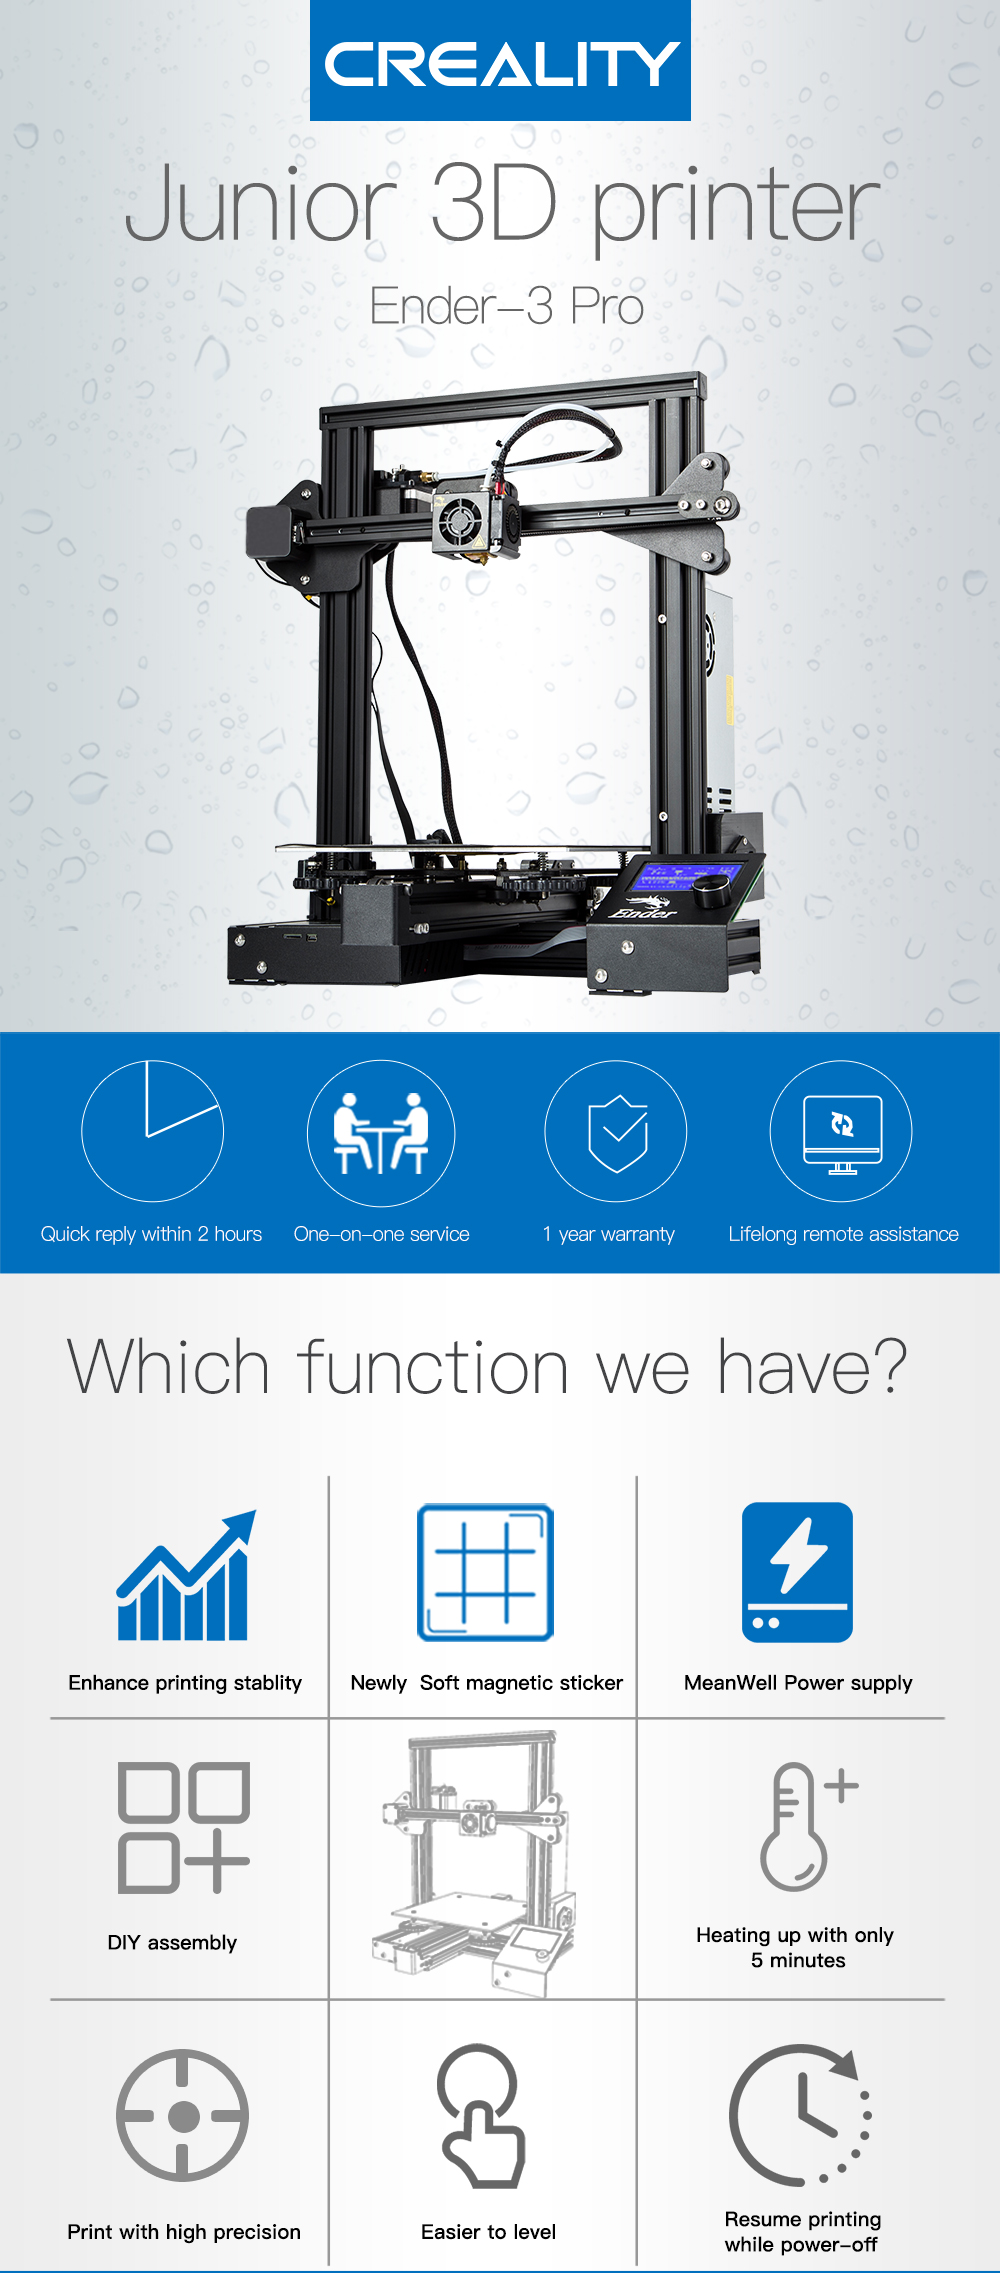 Creality 3D® Ender-3 Pro V-slot Prusa I3 DIY 3D Printer 220x220x250mm Printing Size With Magnetic Removable Platform Sticker/Power Resume Function/Off 6